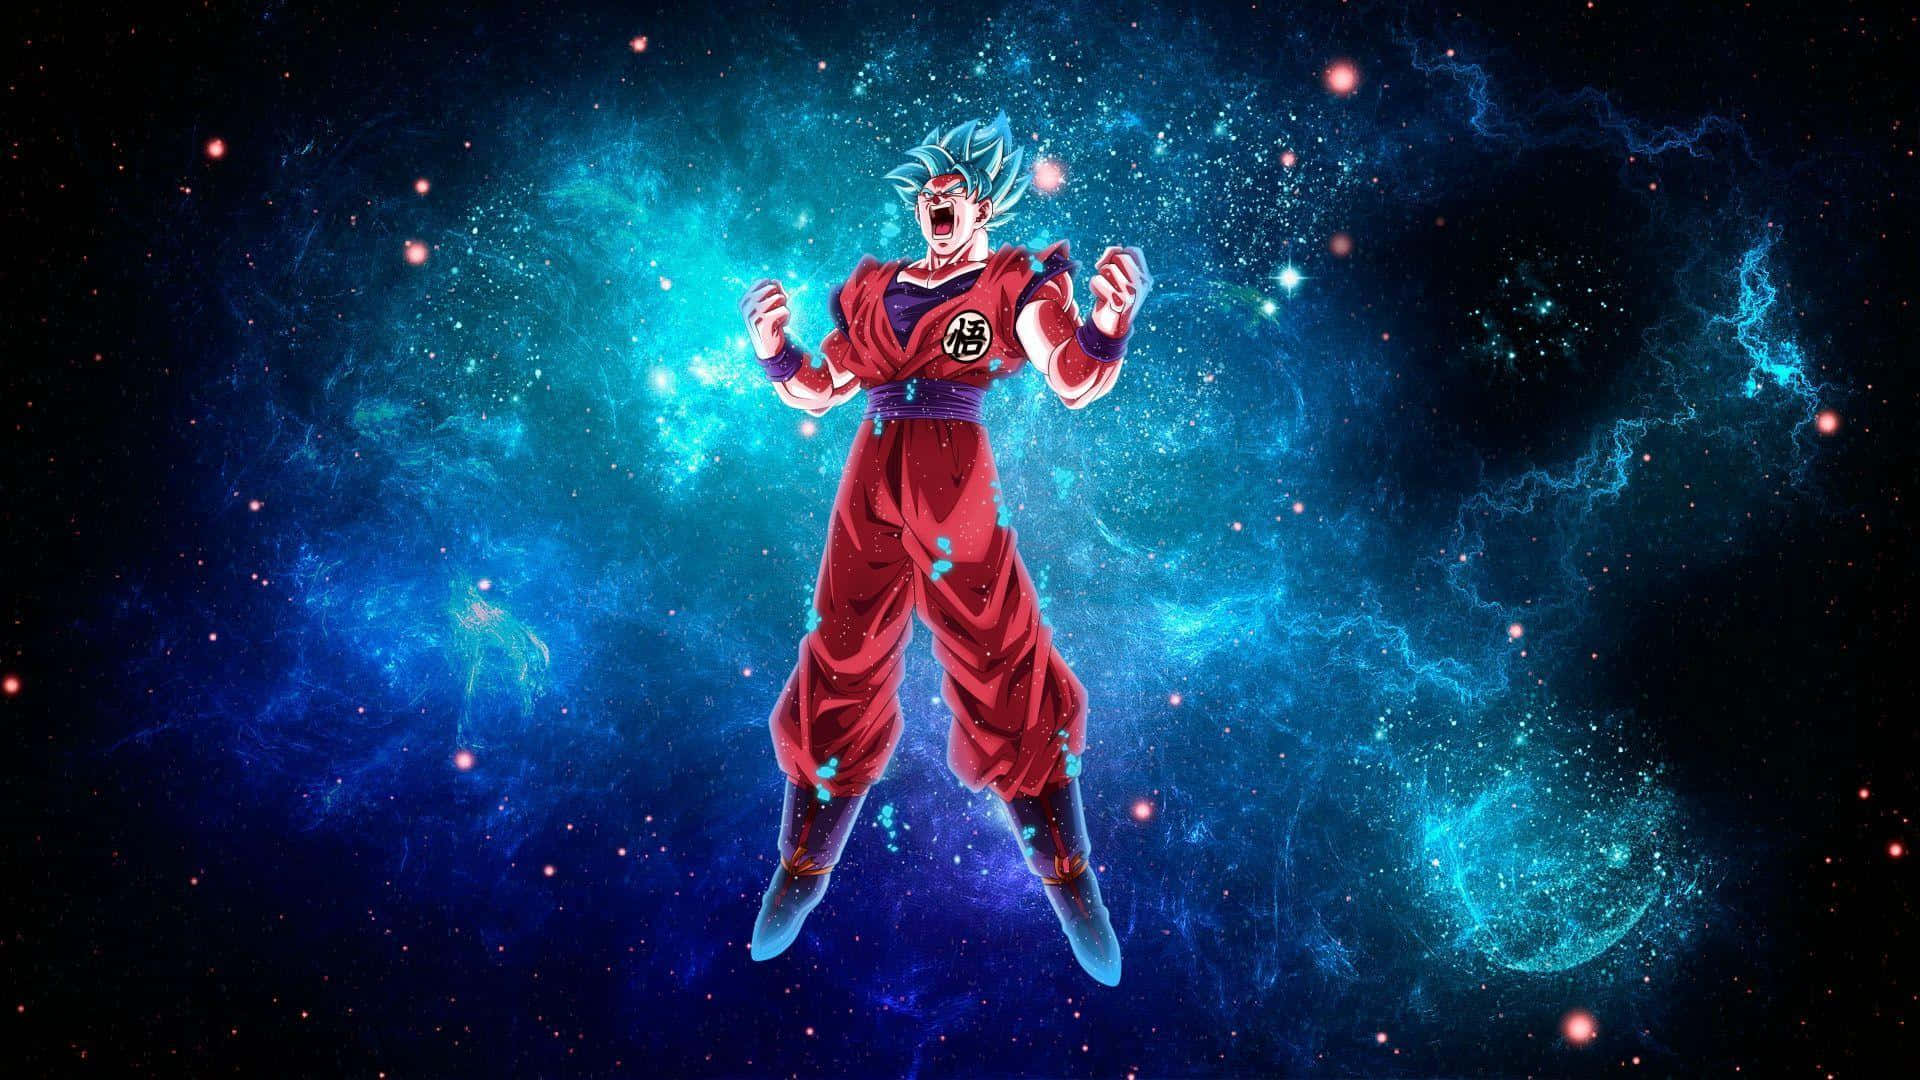 Goku, Legendary Hero of Dragon Ball